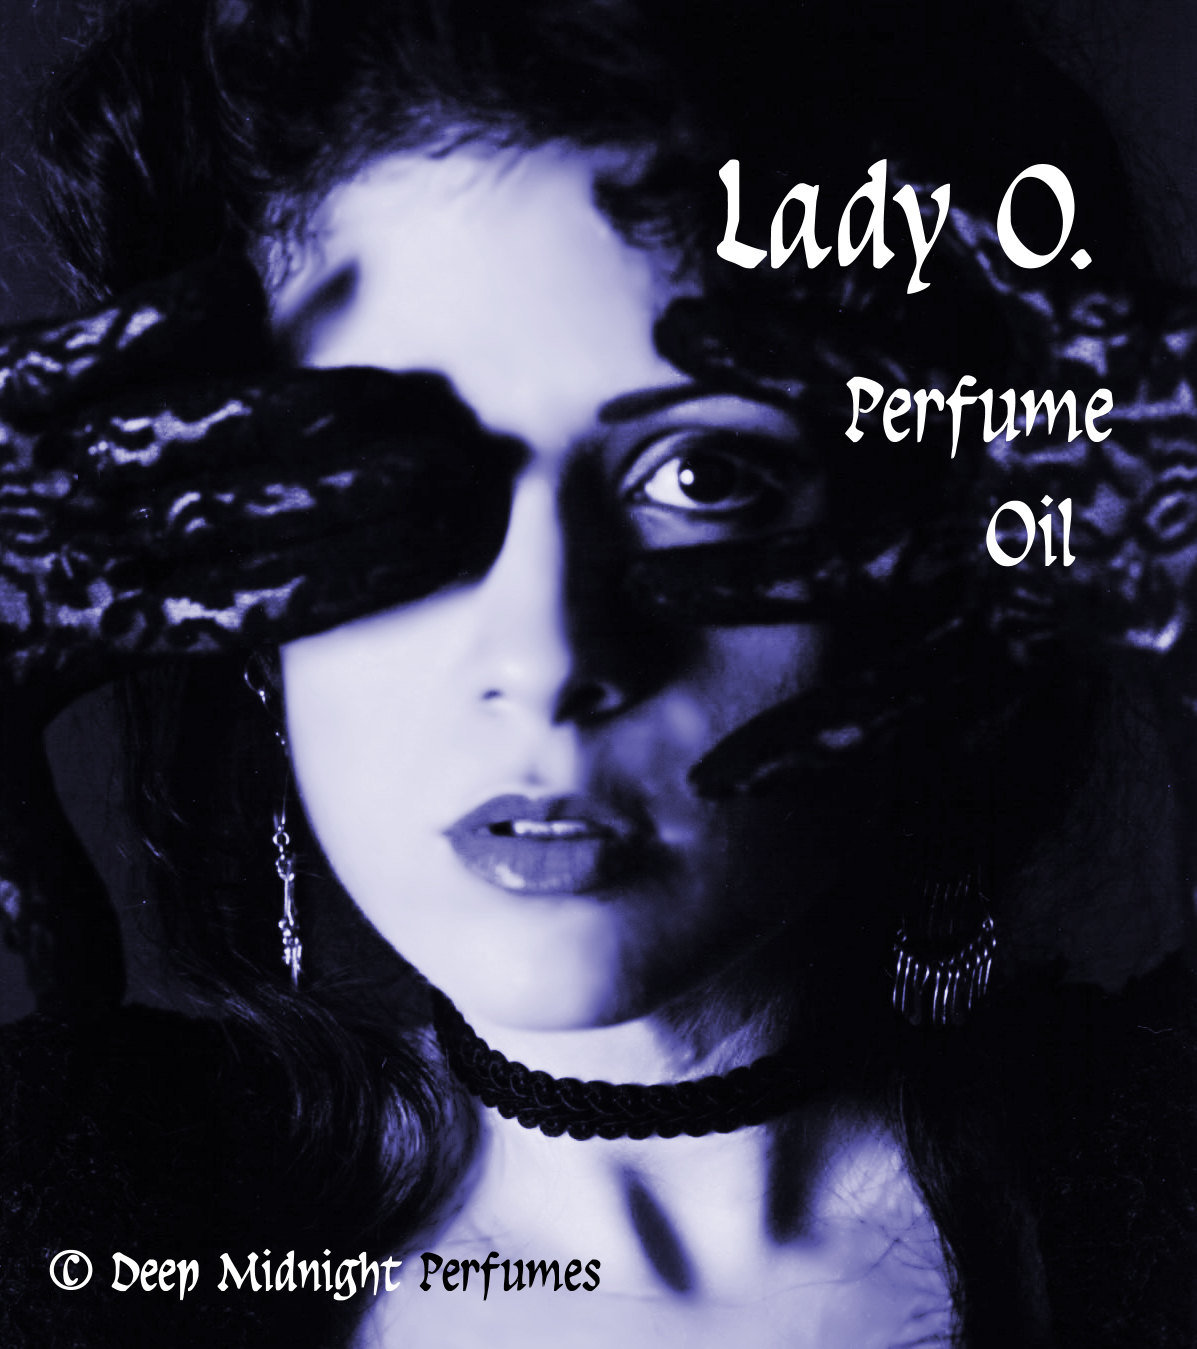 LADY O.™ Perfume Oil - Honey Musk, Cardamom, Spicy Leathery Pimento - Gothic Perfume - Victorian Perfume Oil